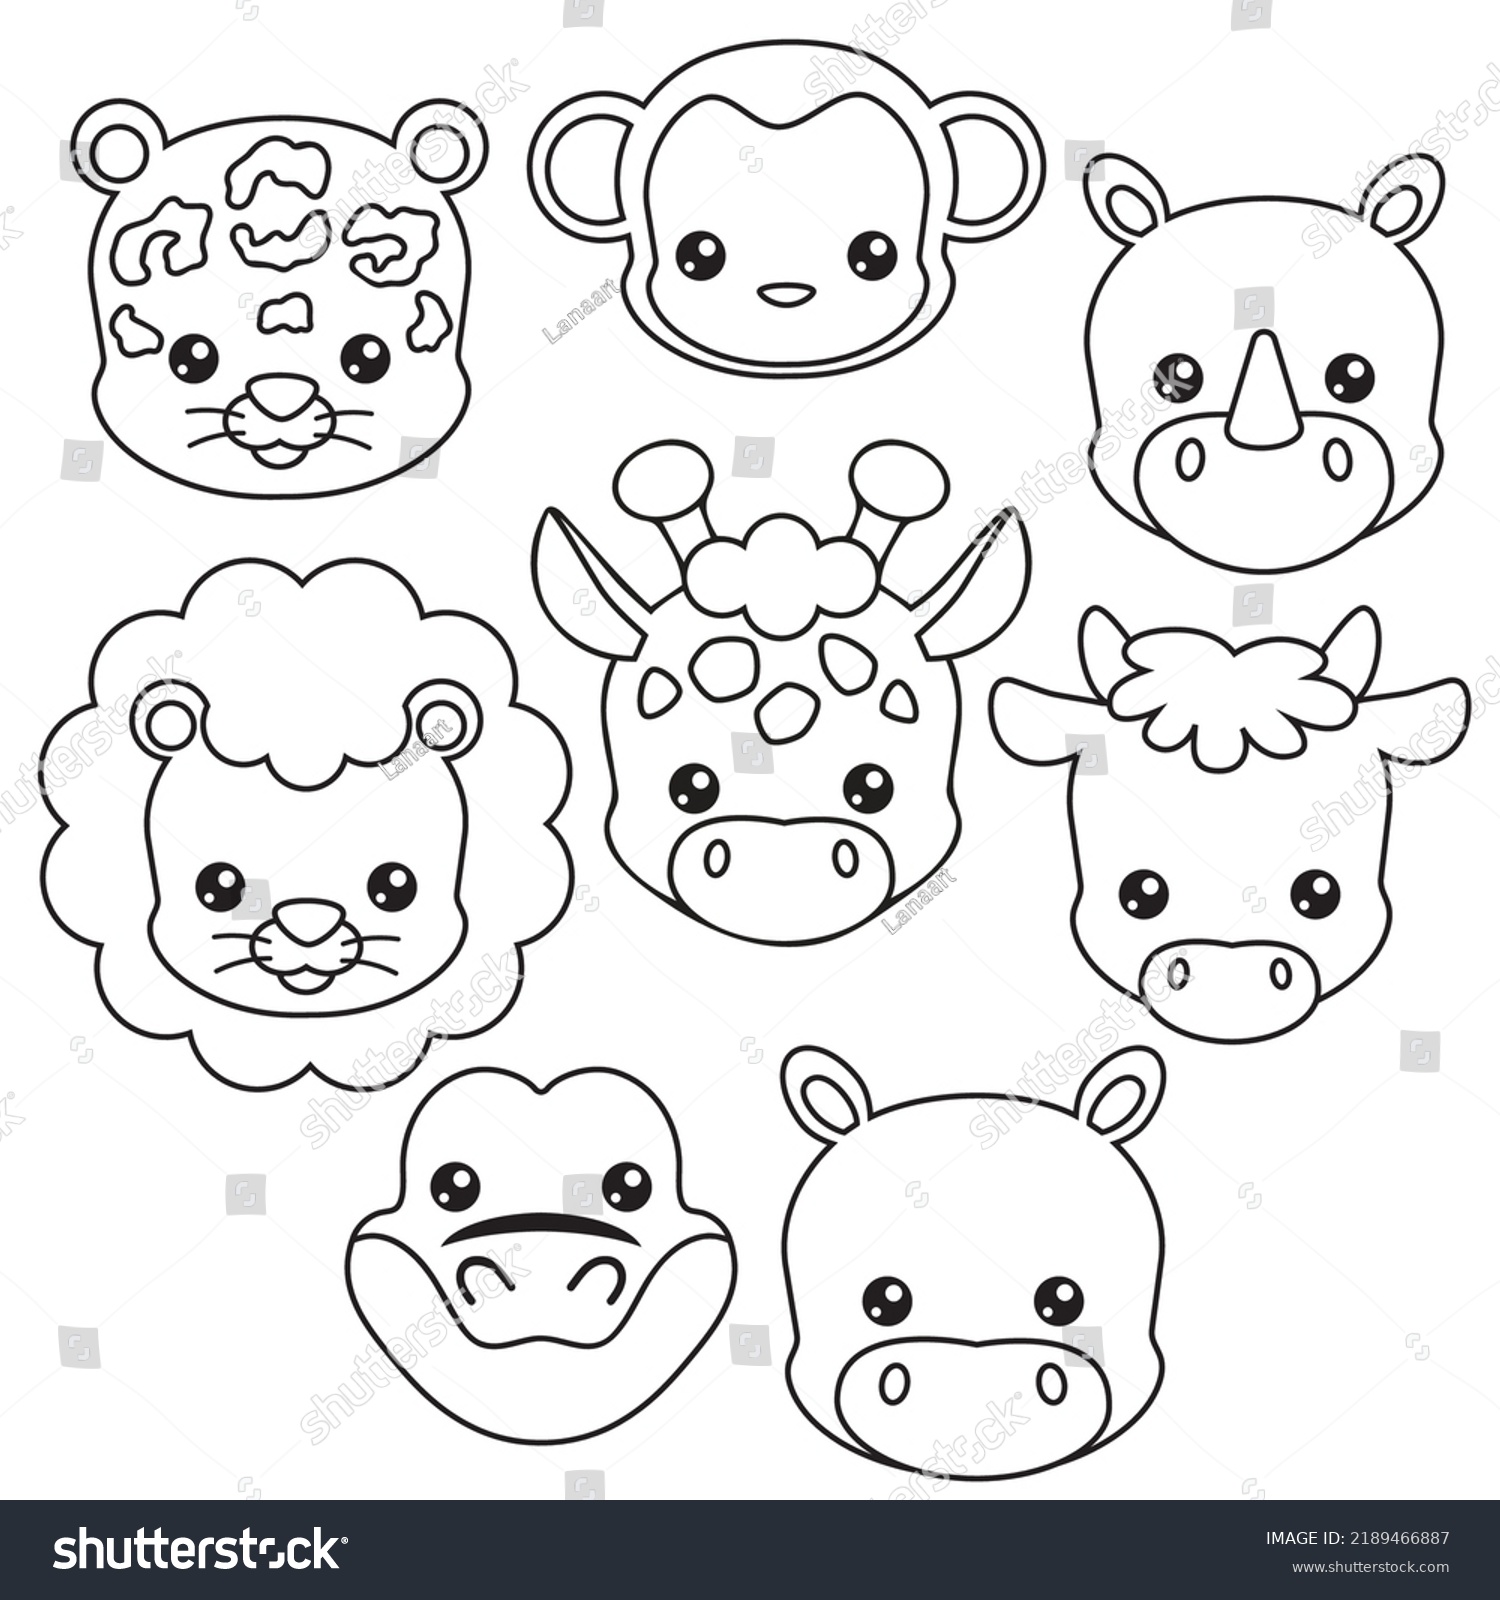 Cute Baby Animal Face Vector Cartoon Stock Vector (Royalty Free ...